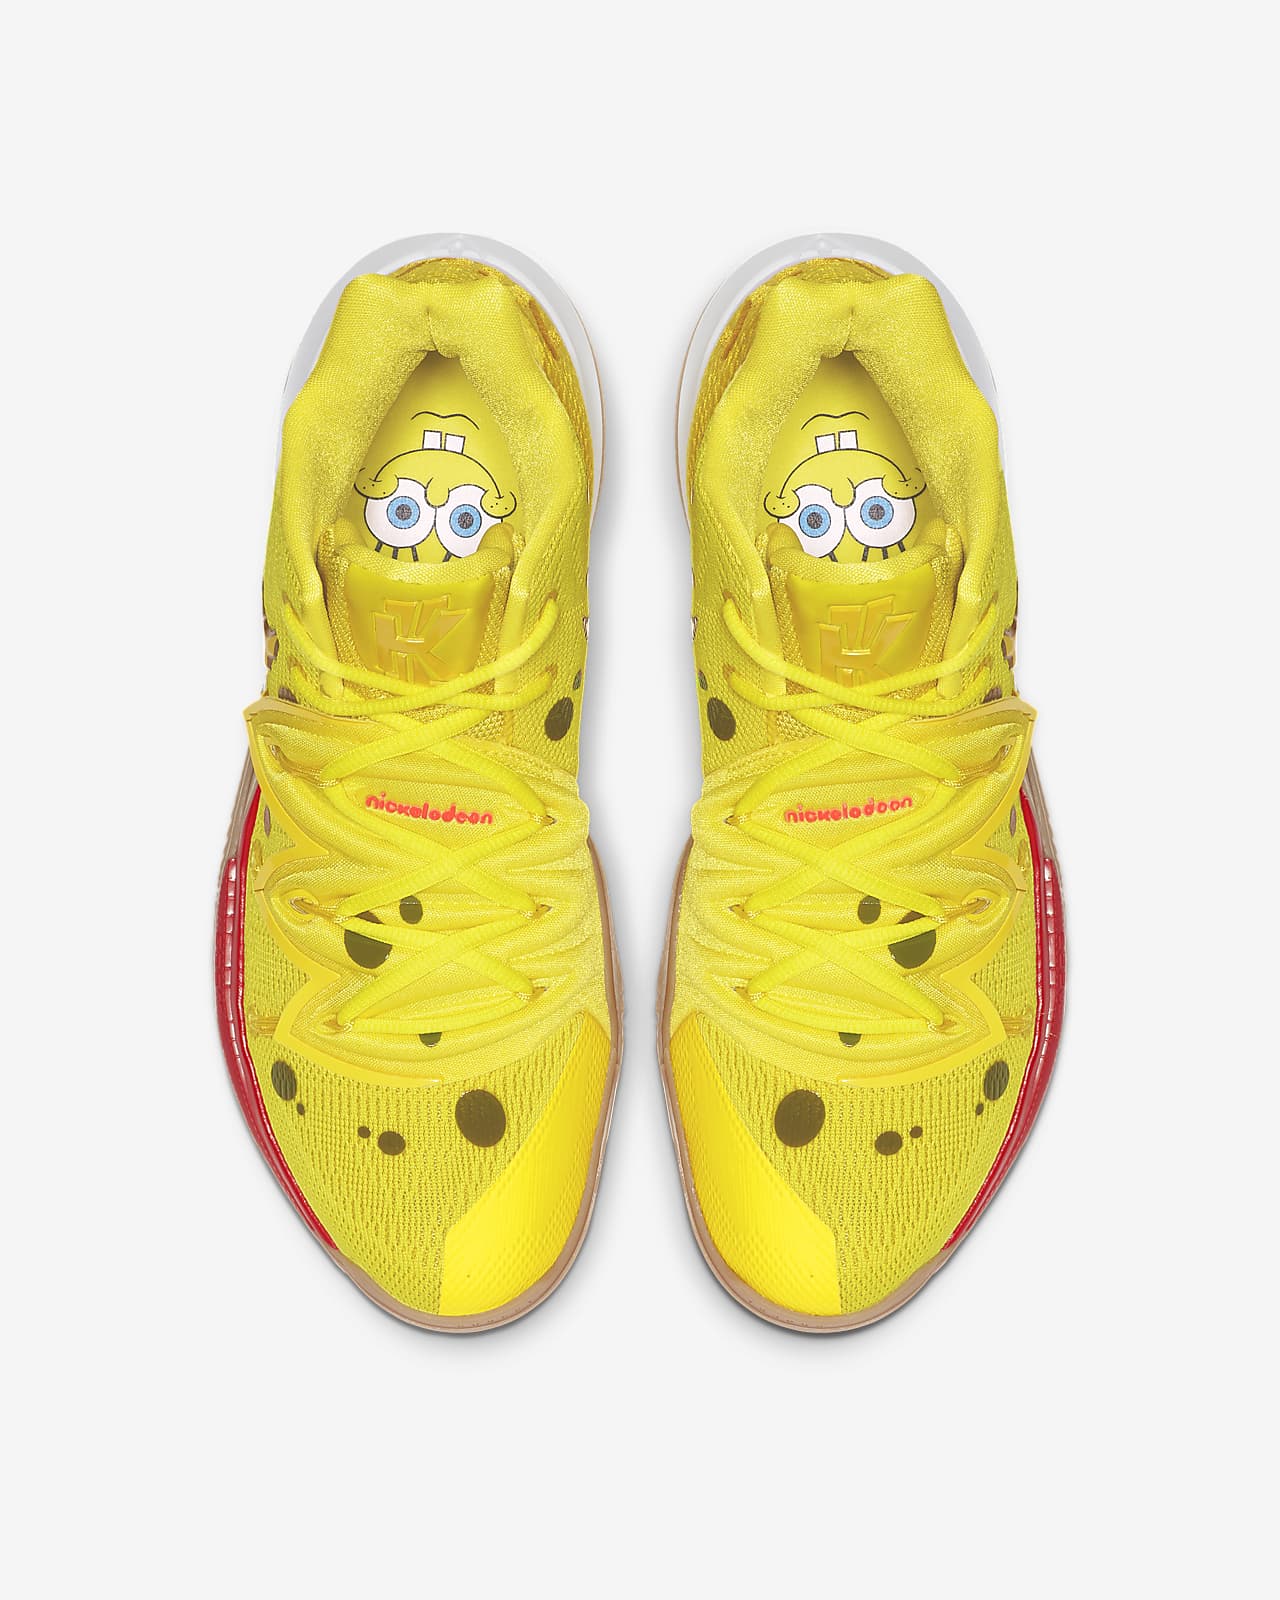 spongebob nike shoes kids